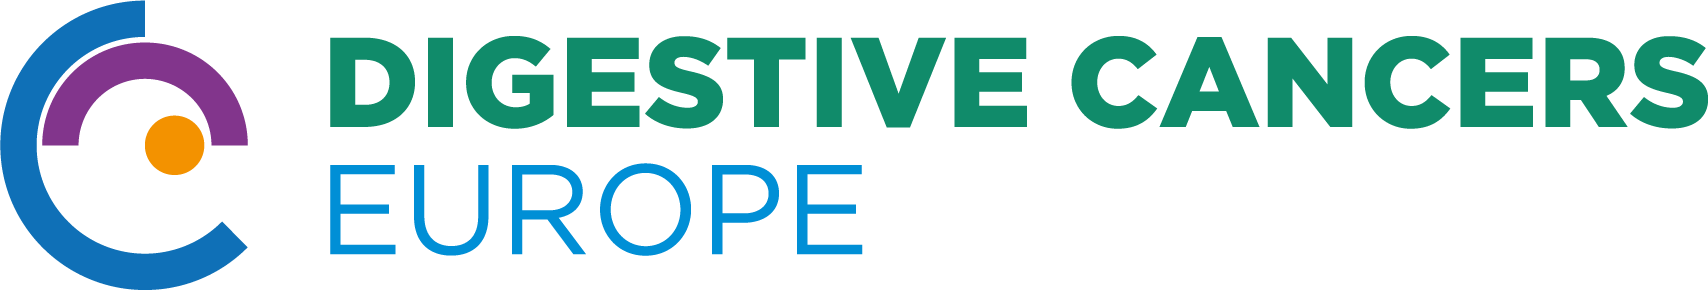 dice-digestive-cancers-europe-logo